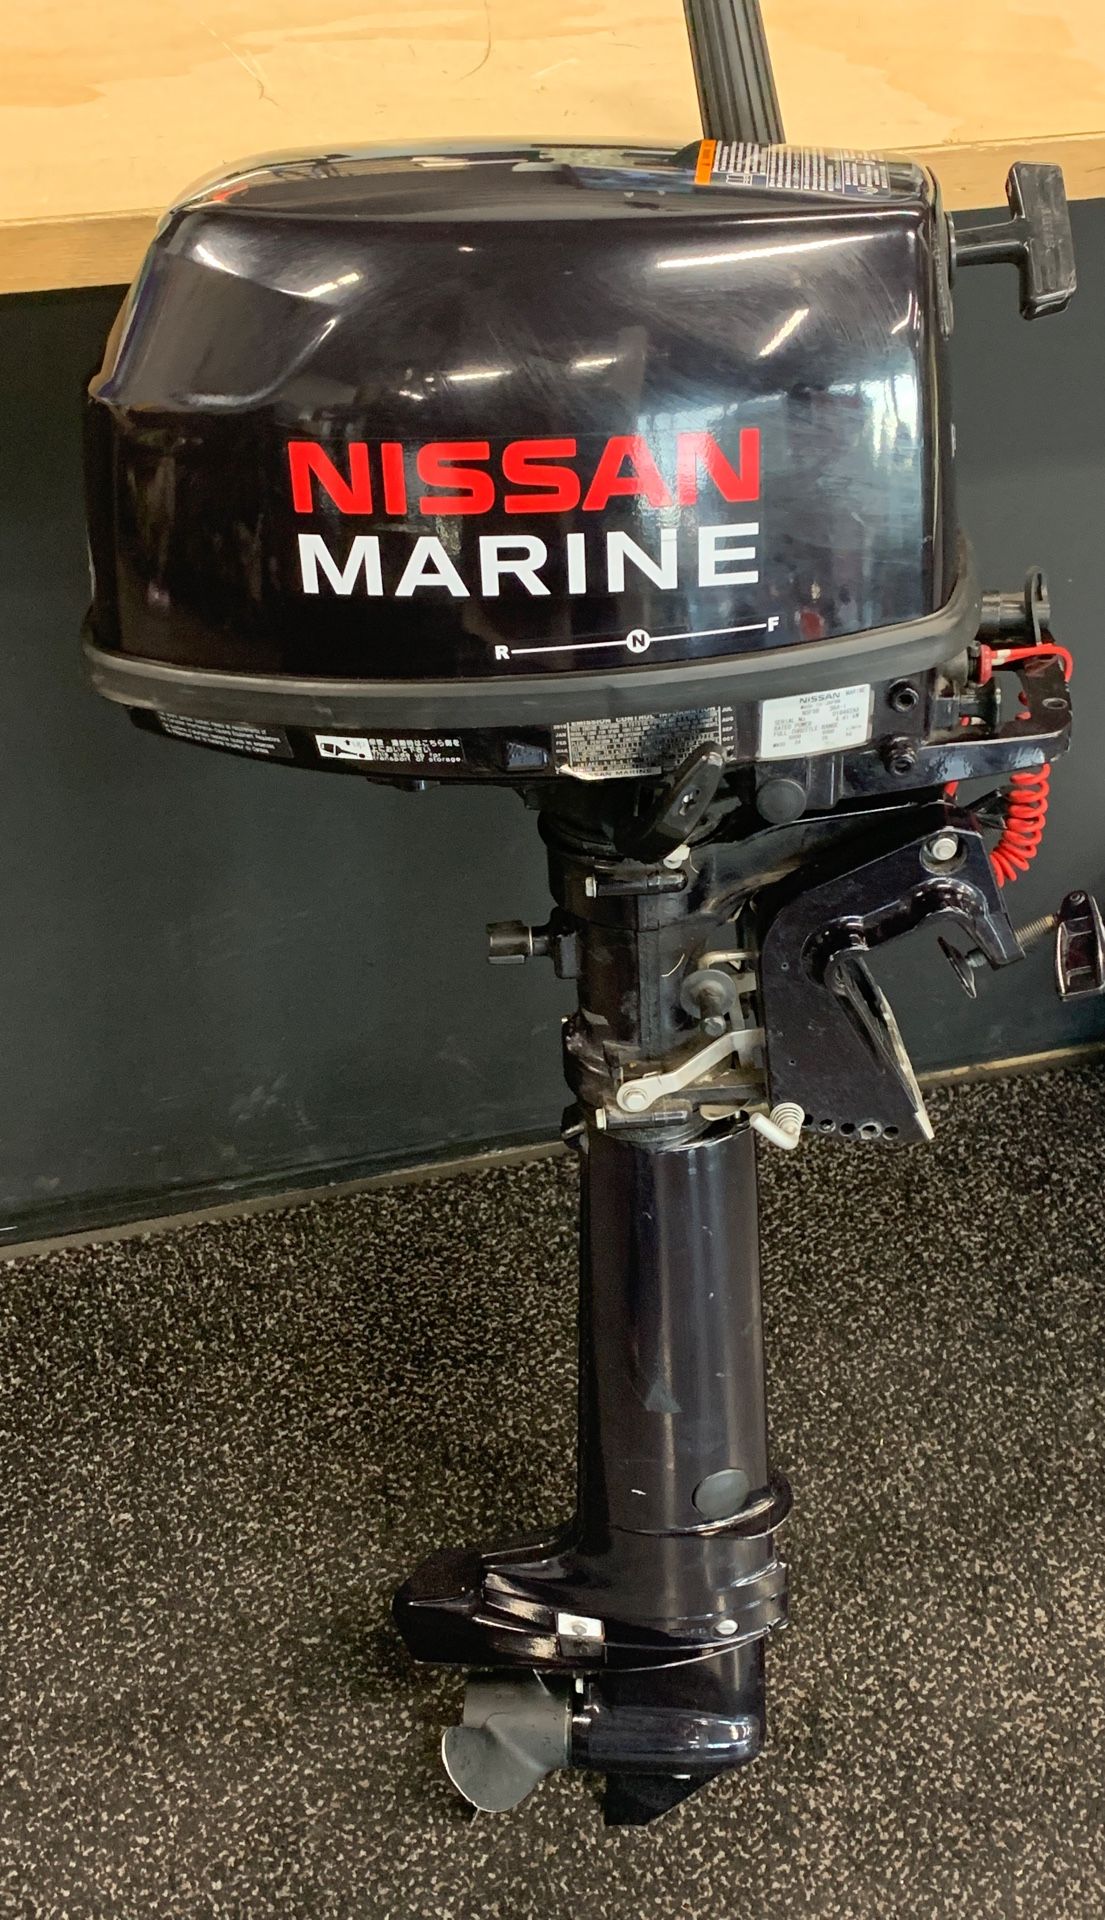 Nissan Marine boat motor